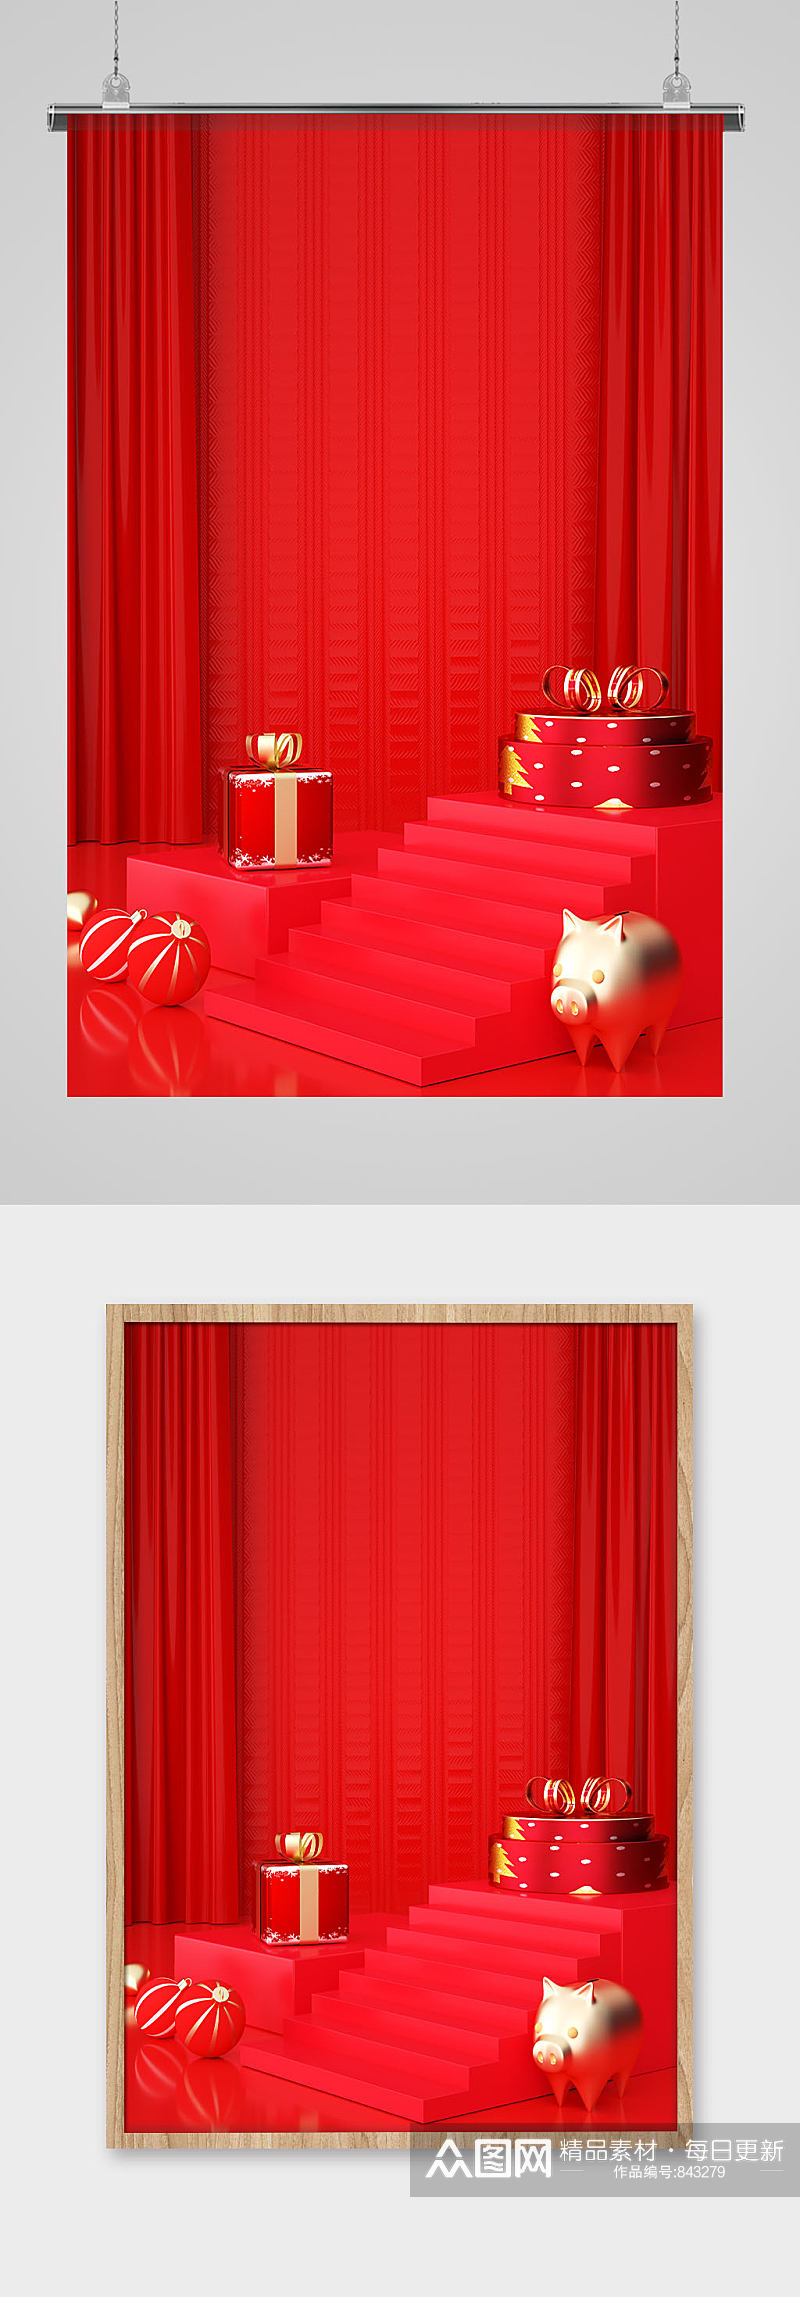 A4红色金猪礼物背景图片素材